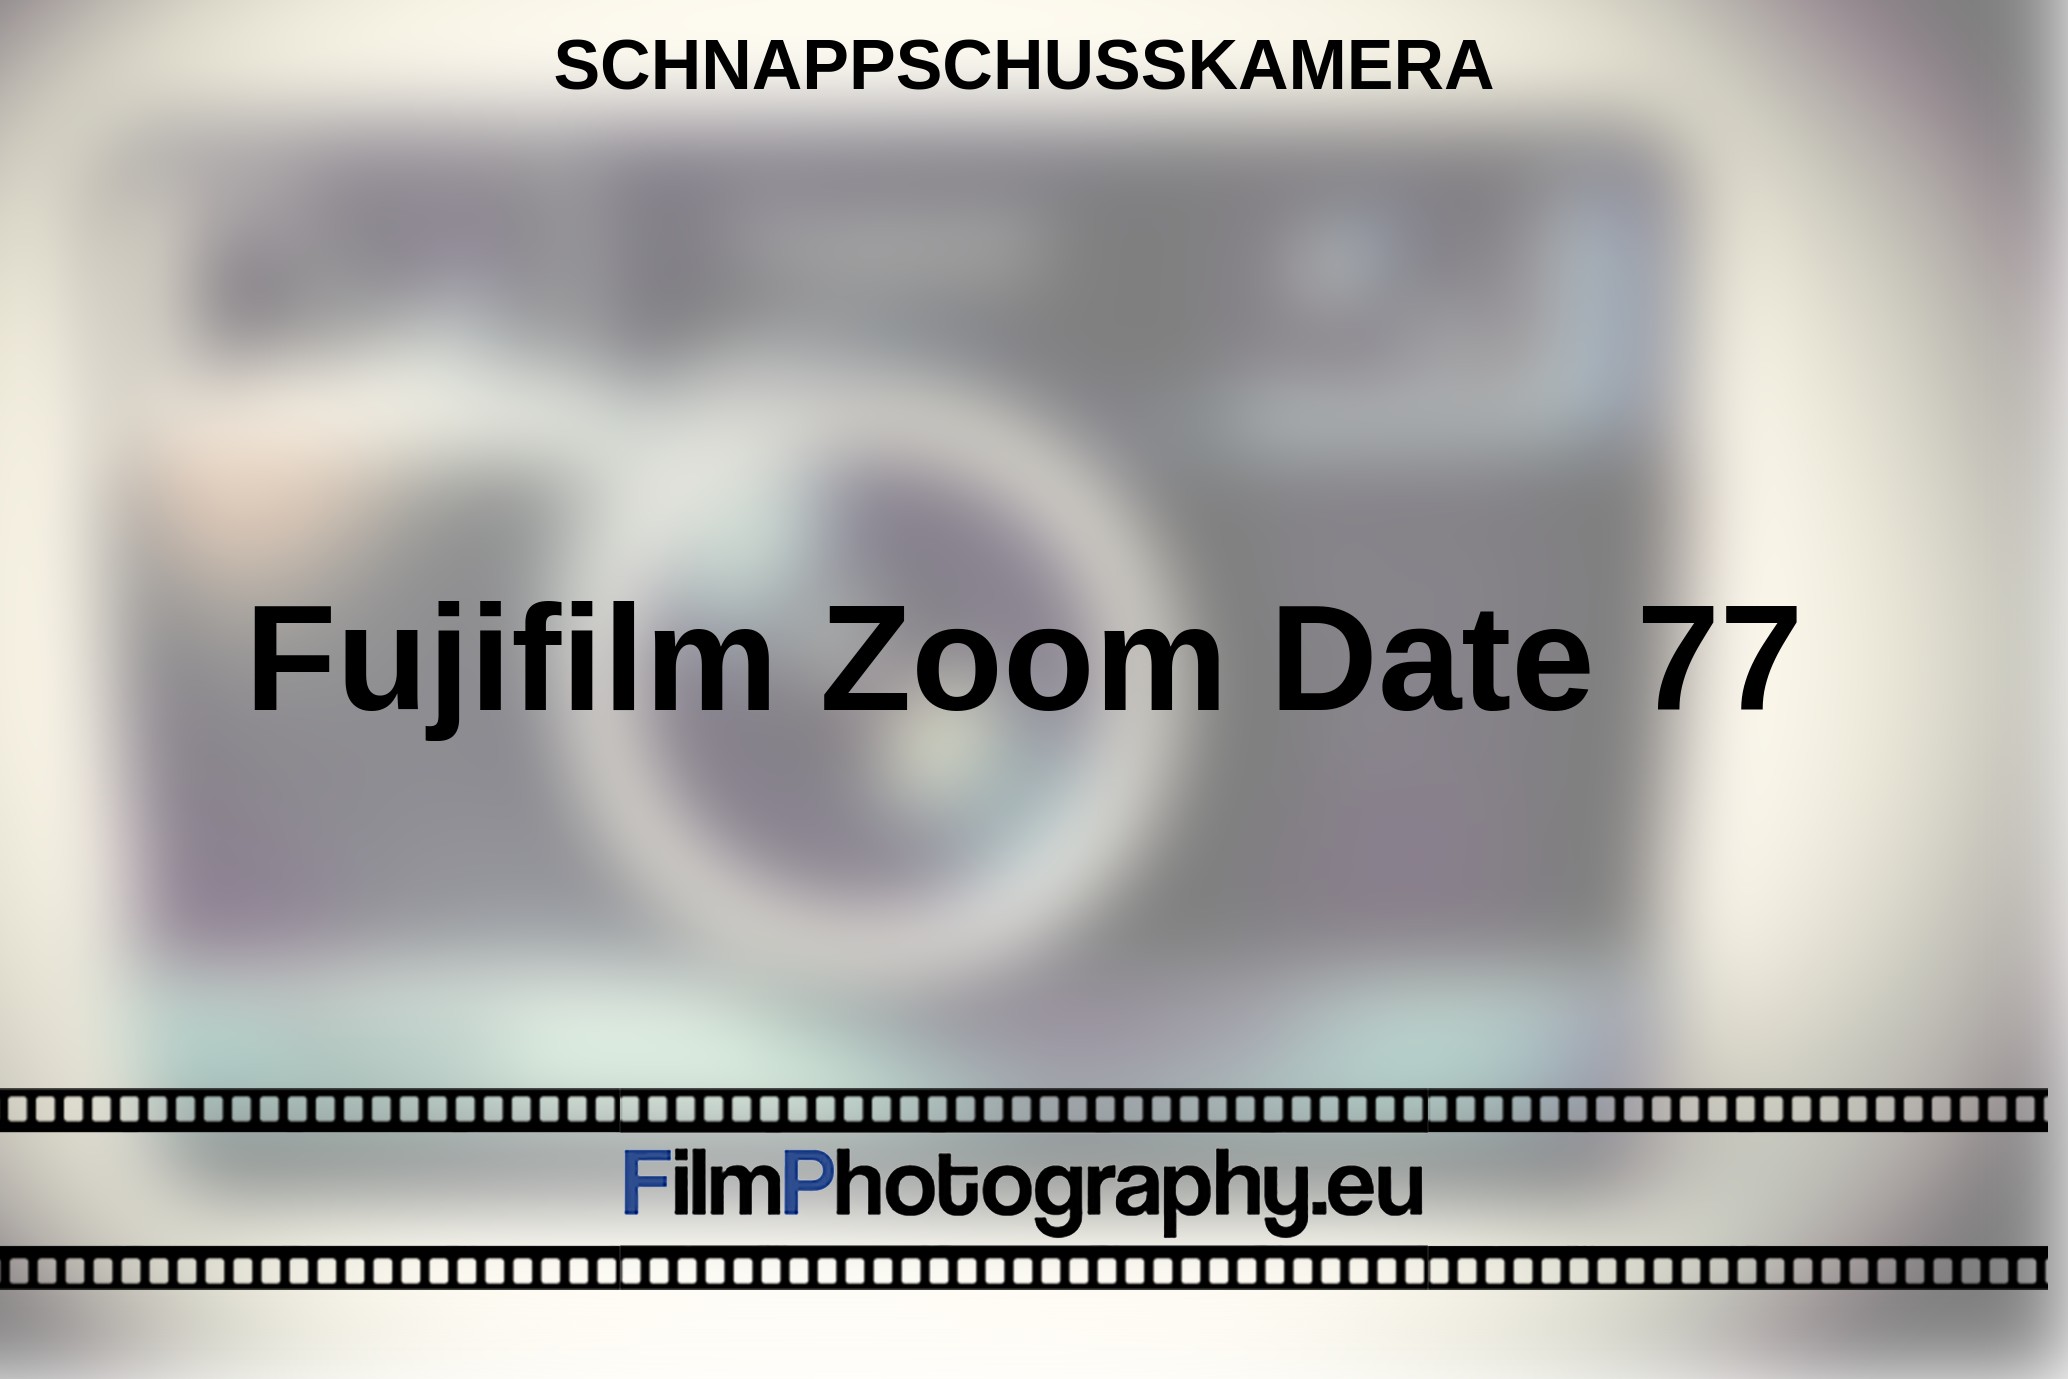 Fujifilm-Zoom-Date-77-Schnappschusskamera-bnv.jpg